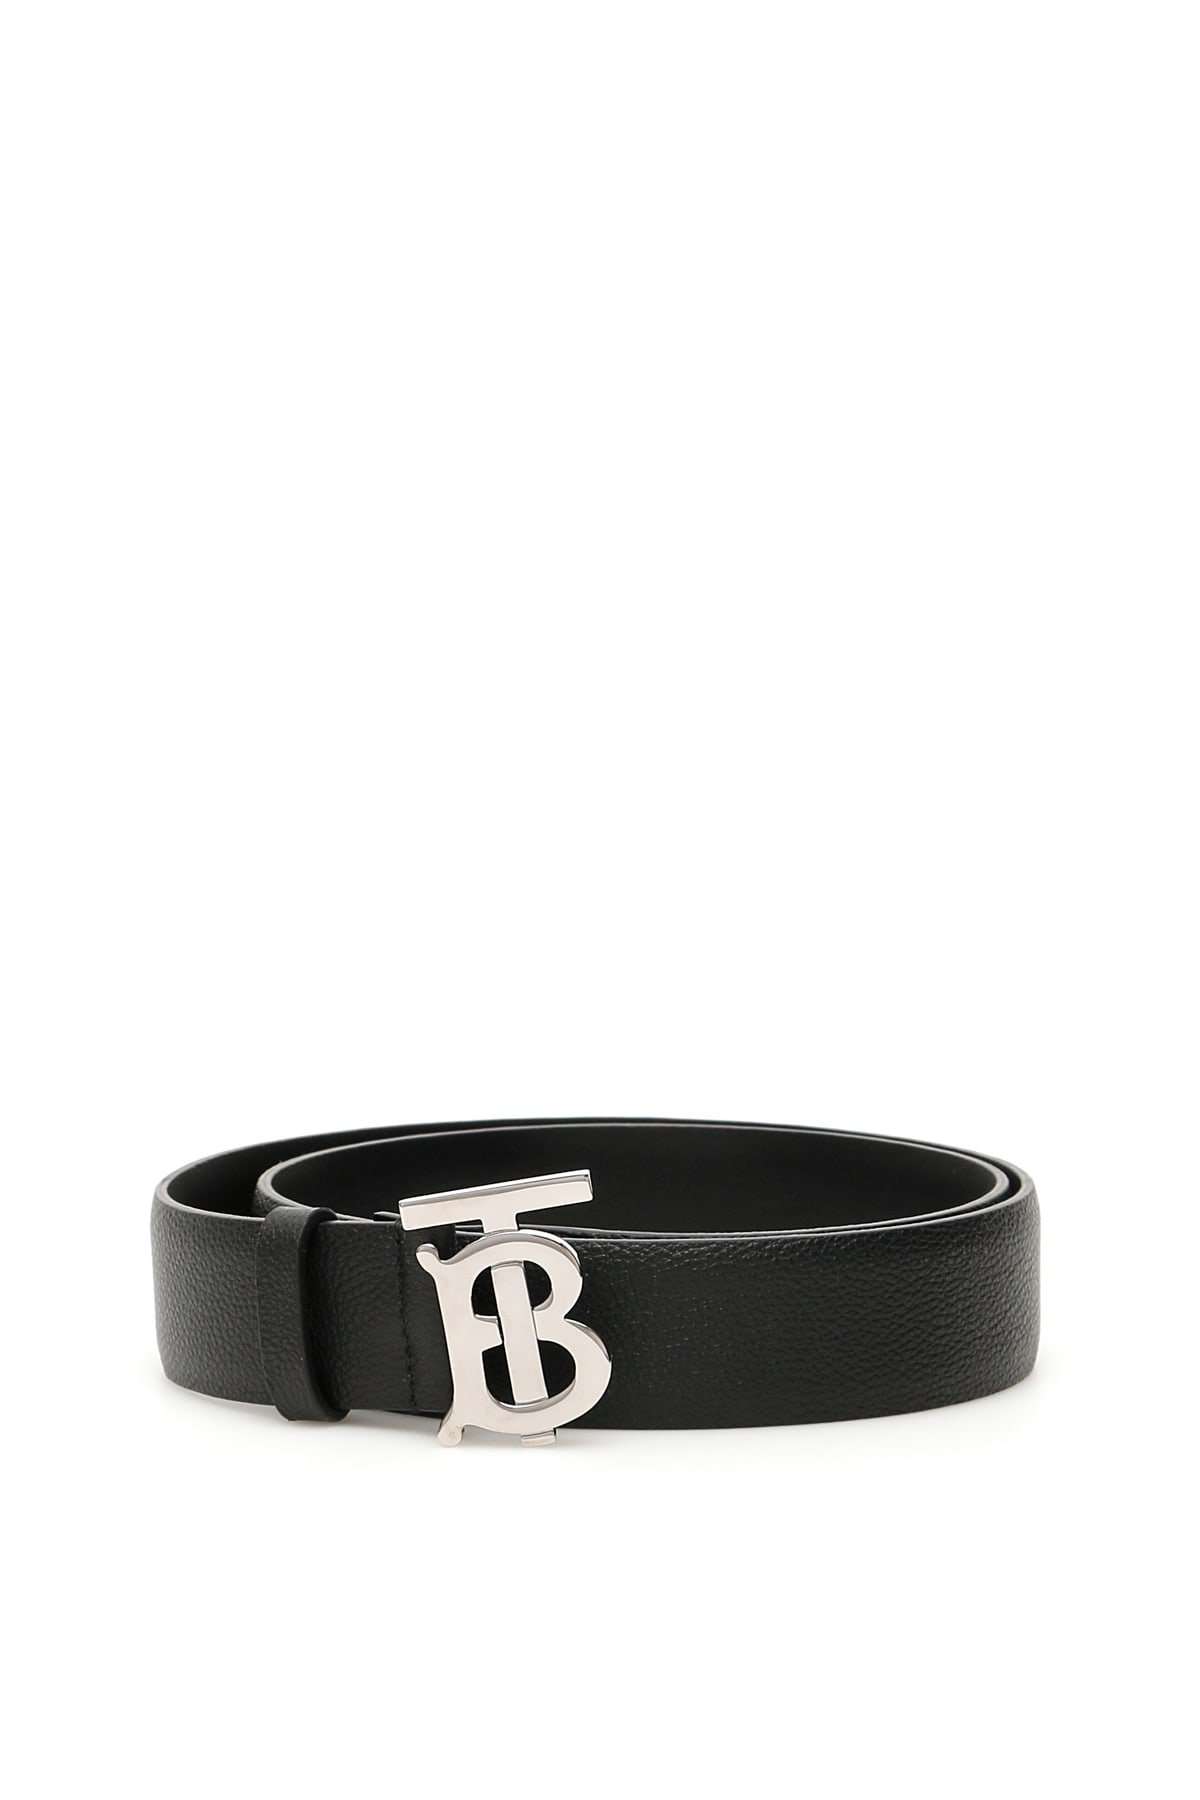 burberry belt black